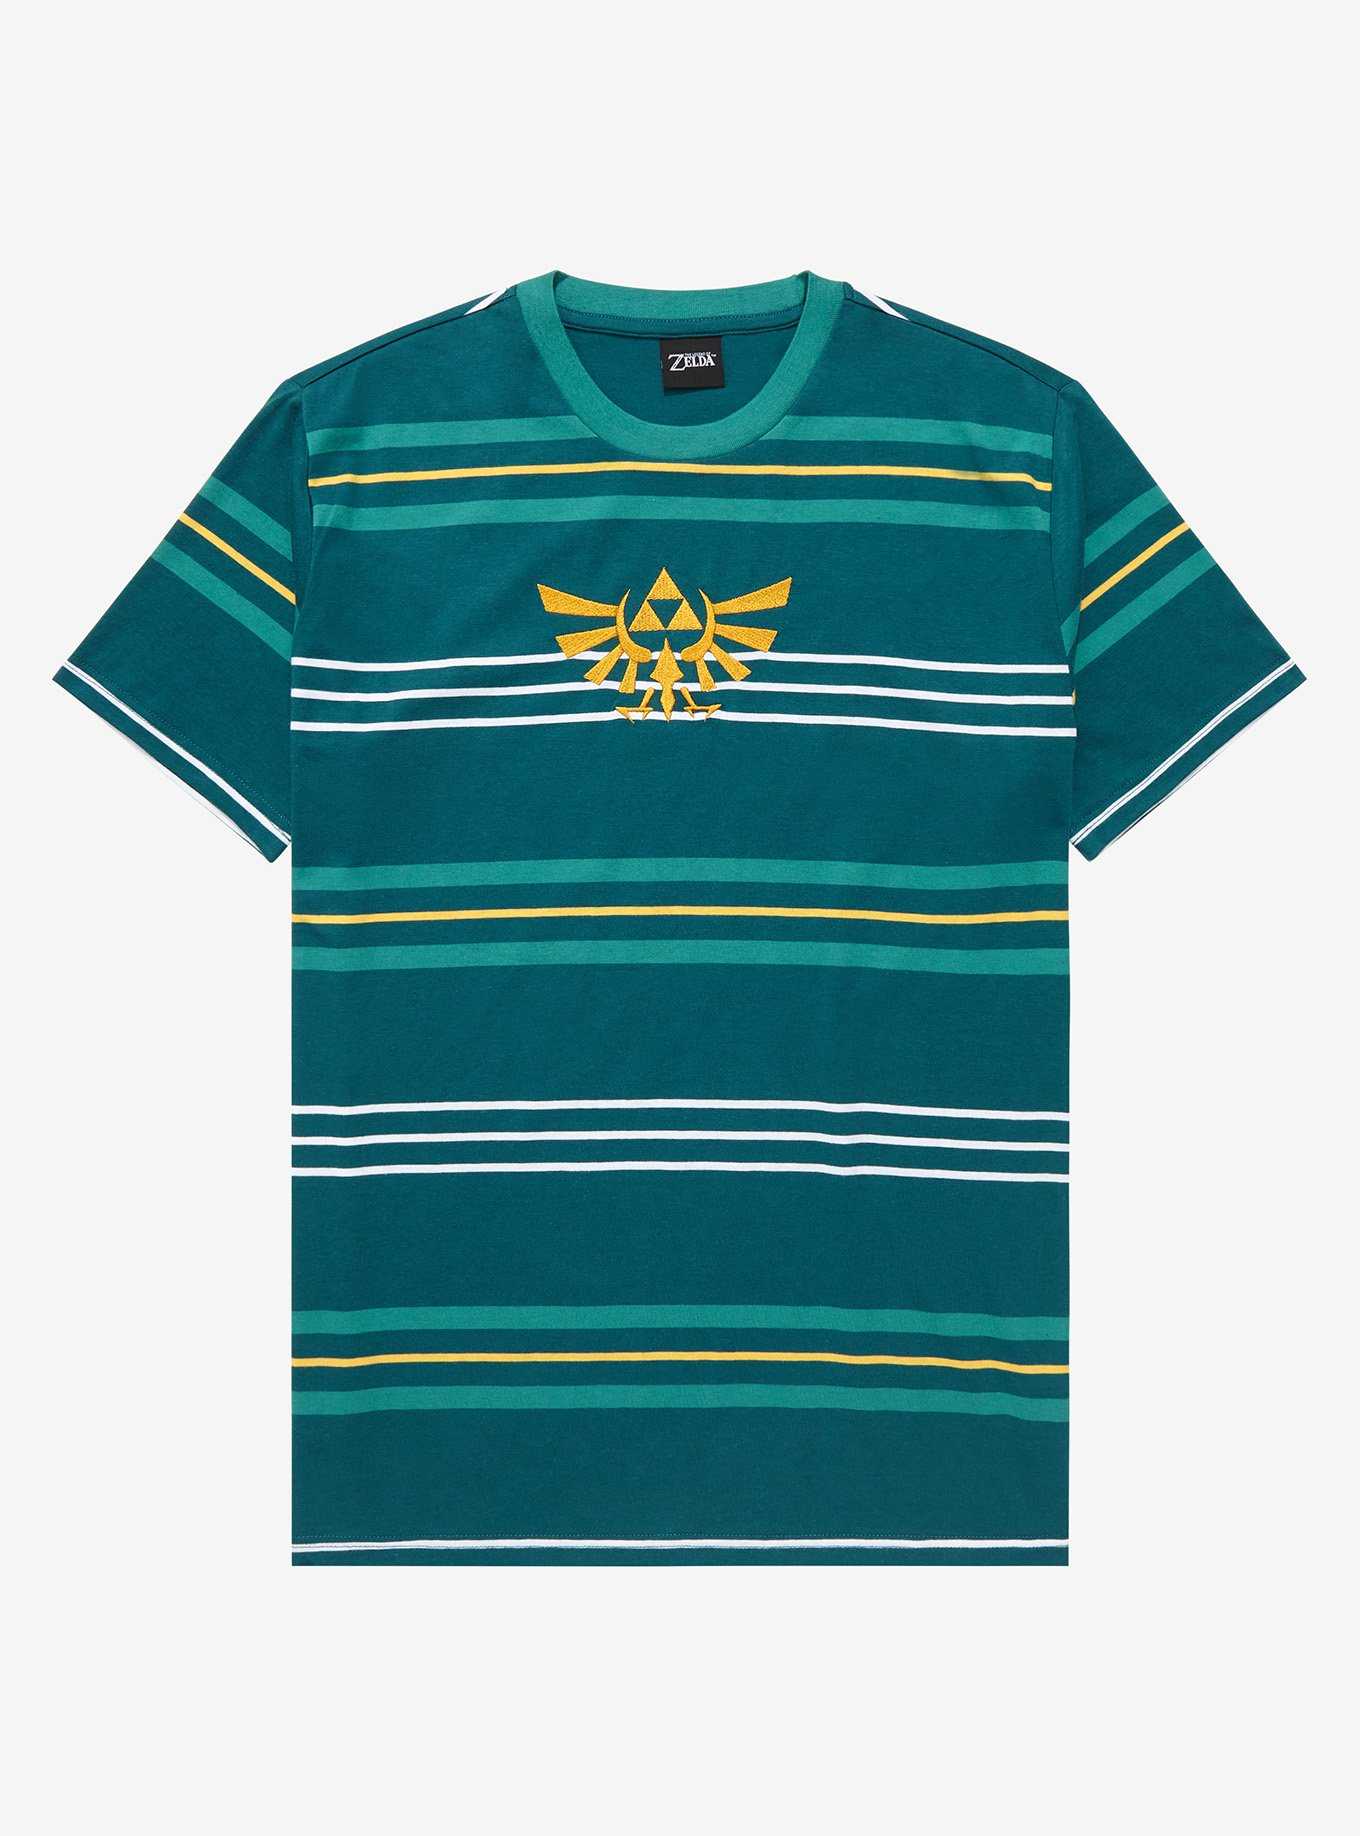 Nintendo Legend of Zelda Striped Crest T-Shirt - BoxLunch Exclusive, , hi-res